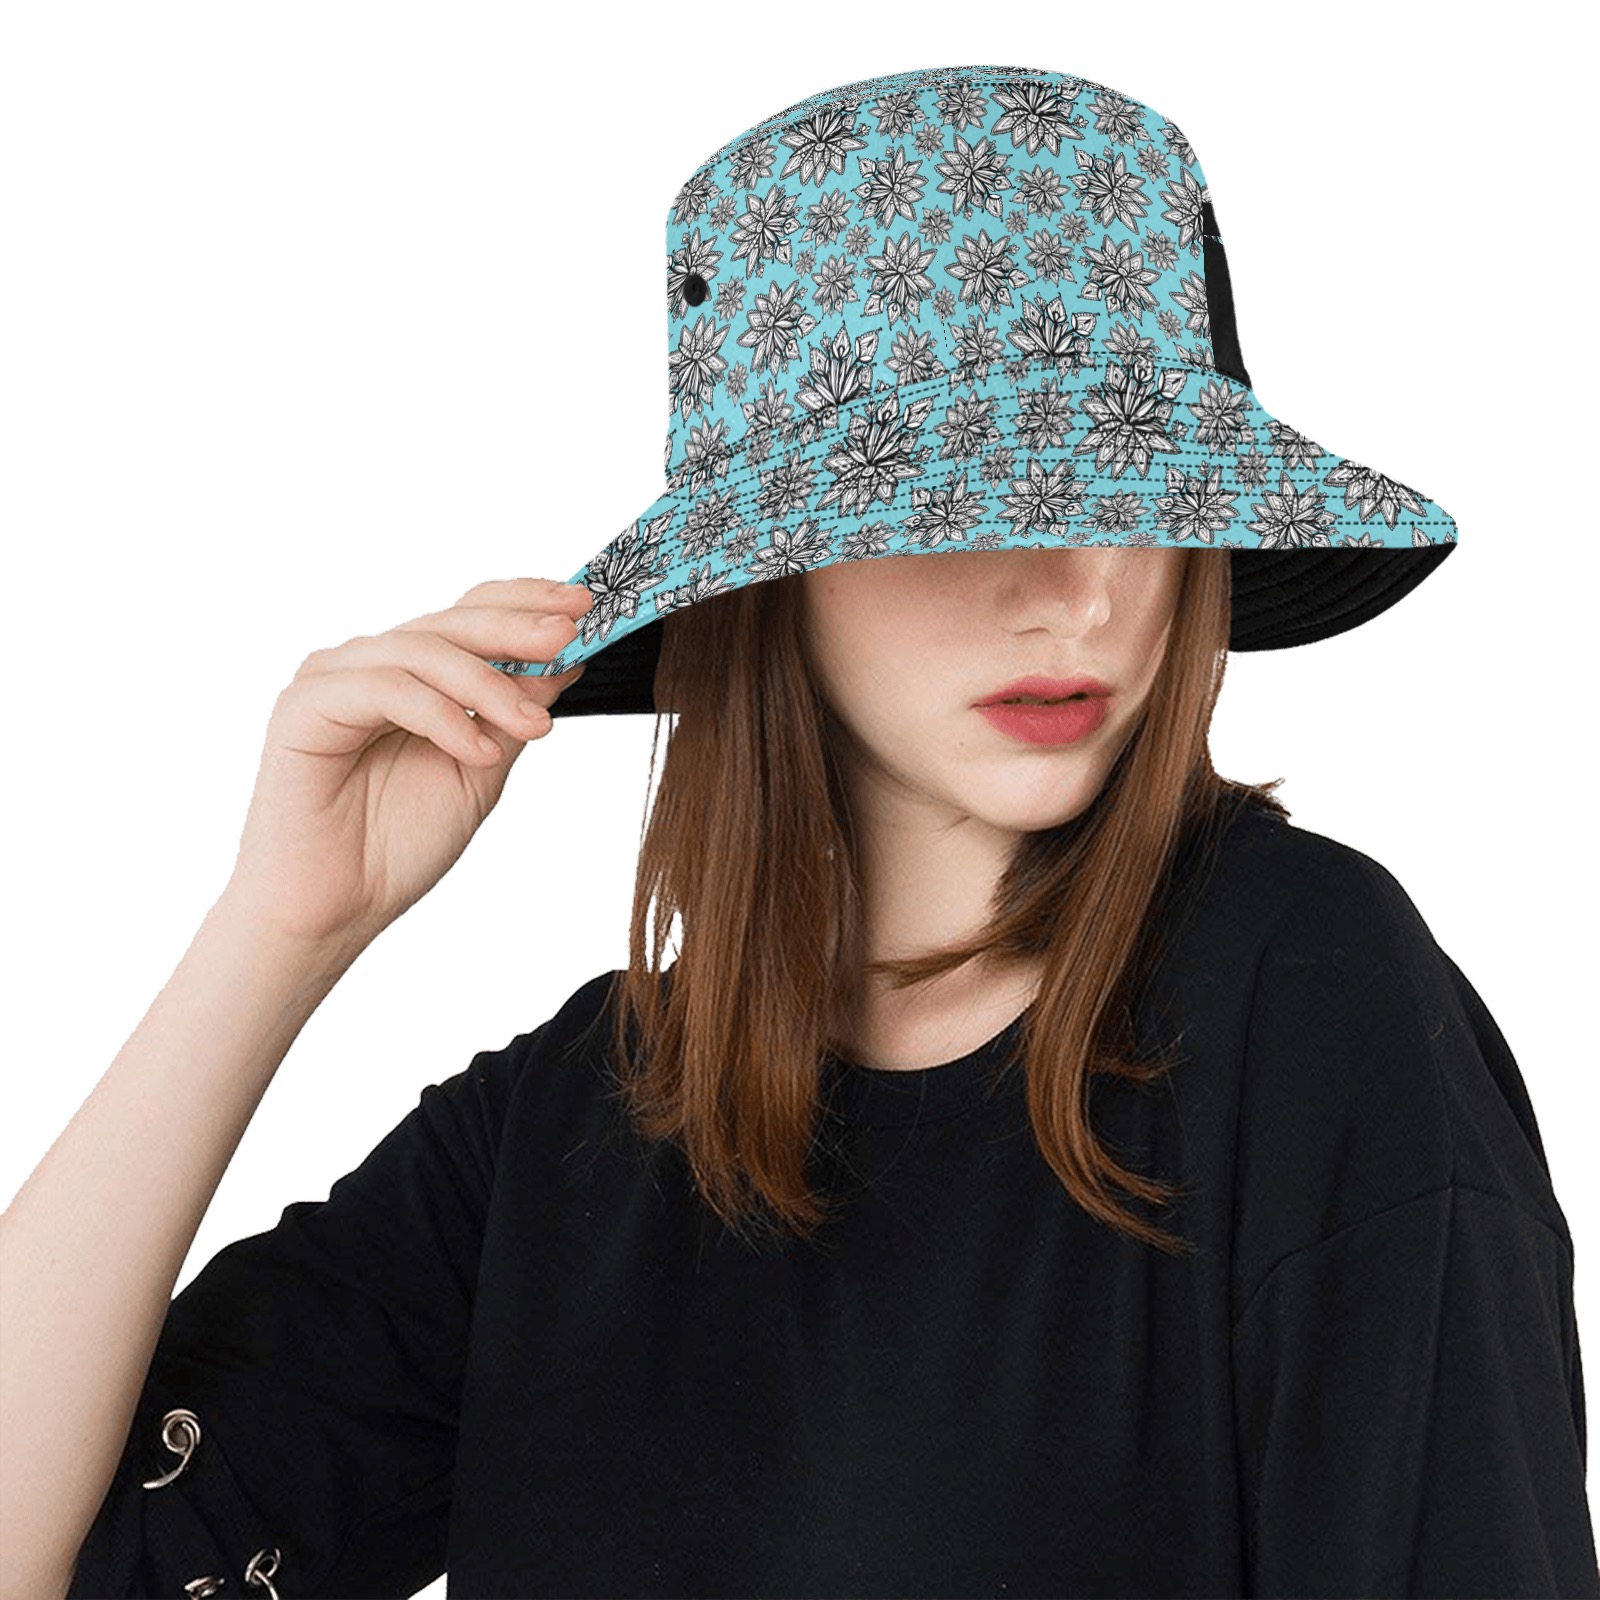 Creekside Floret - turquoise Unisex Summer Bucket Hat